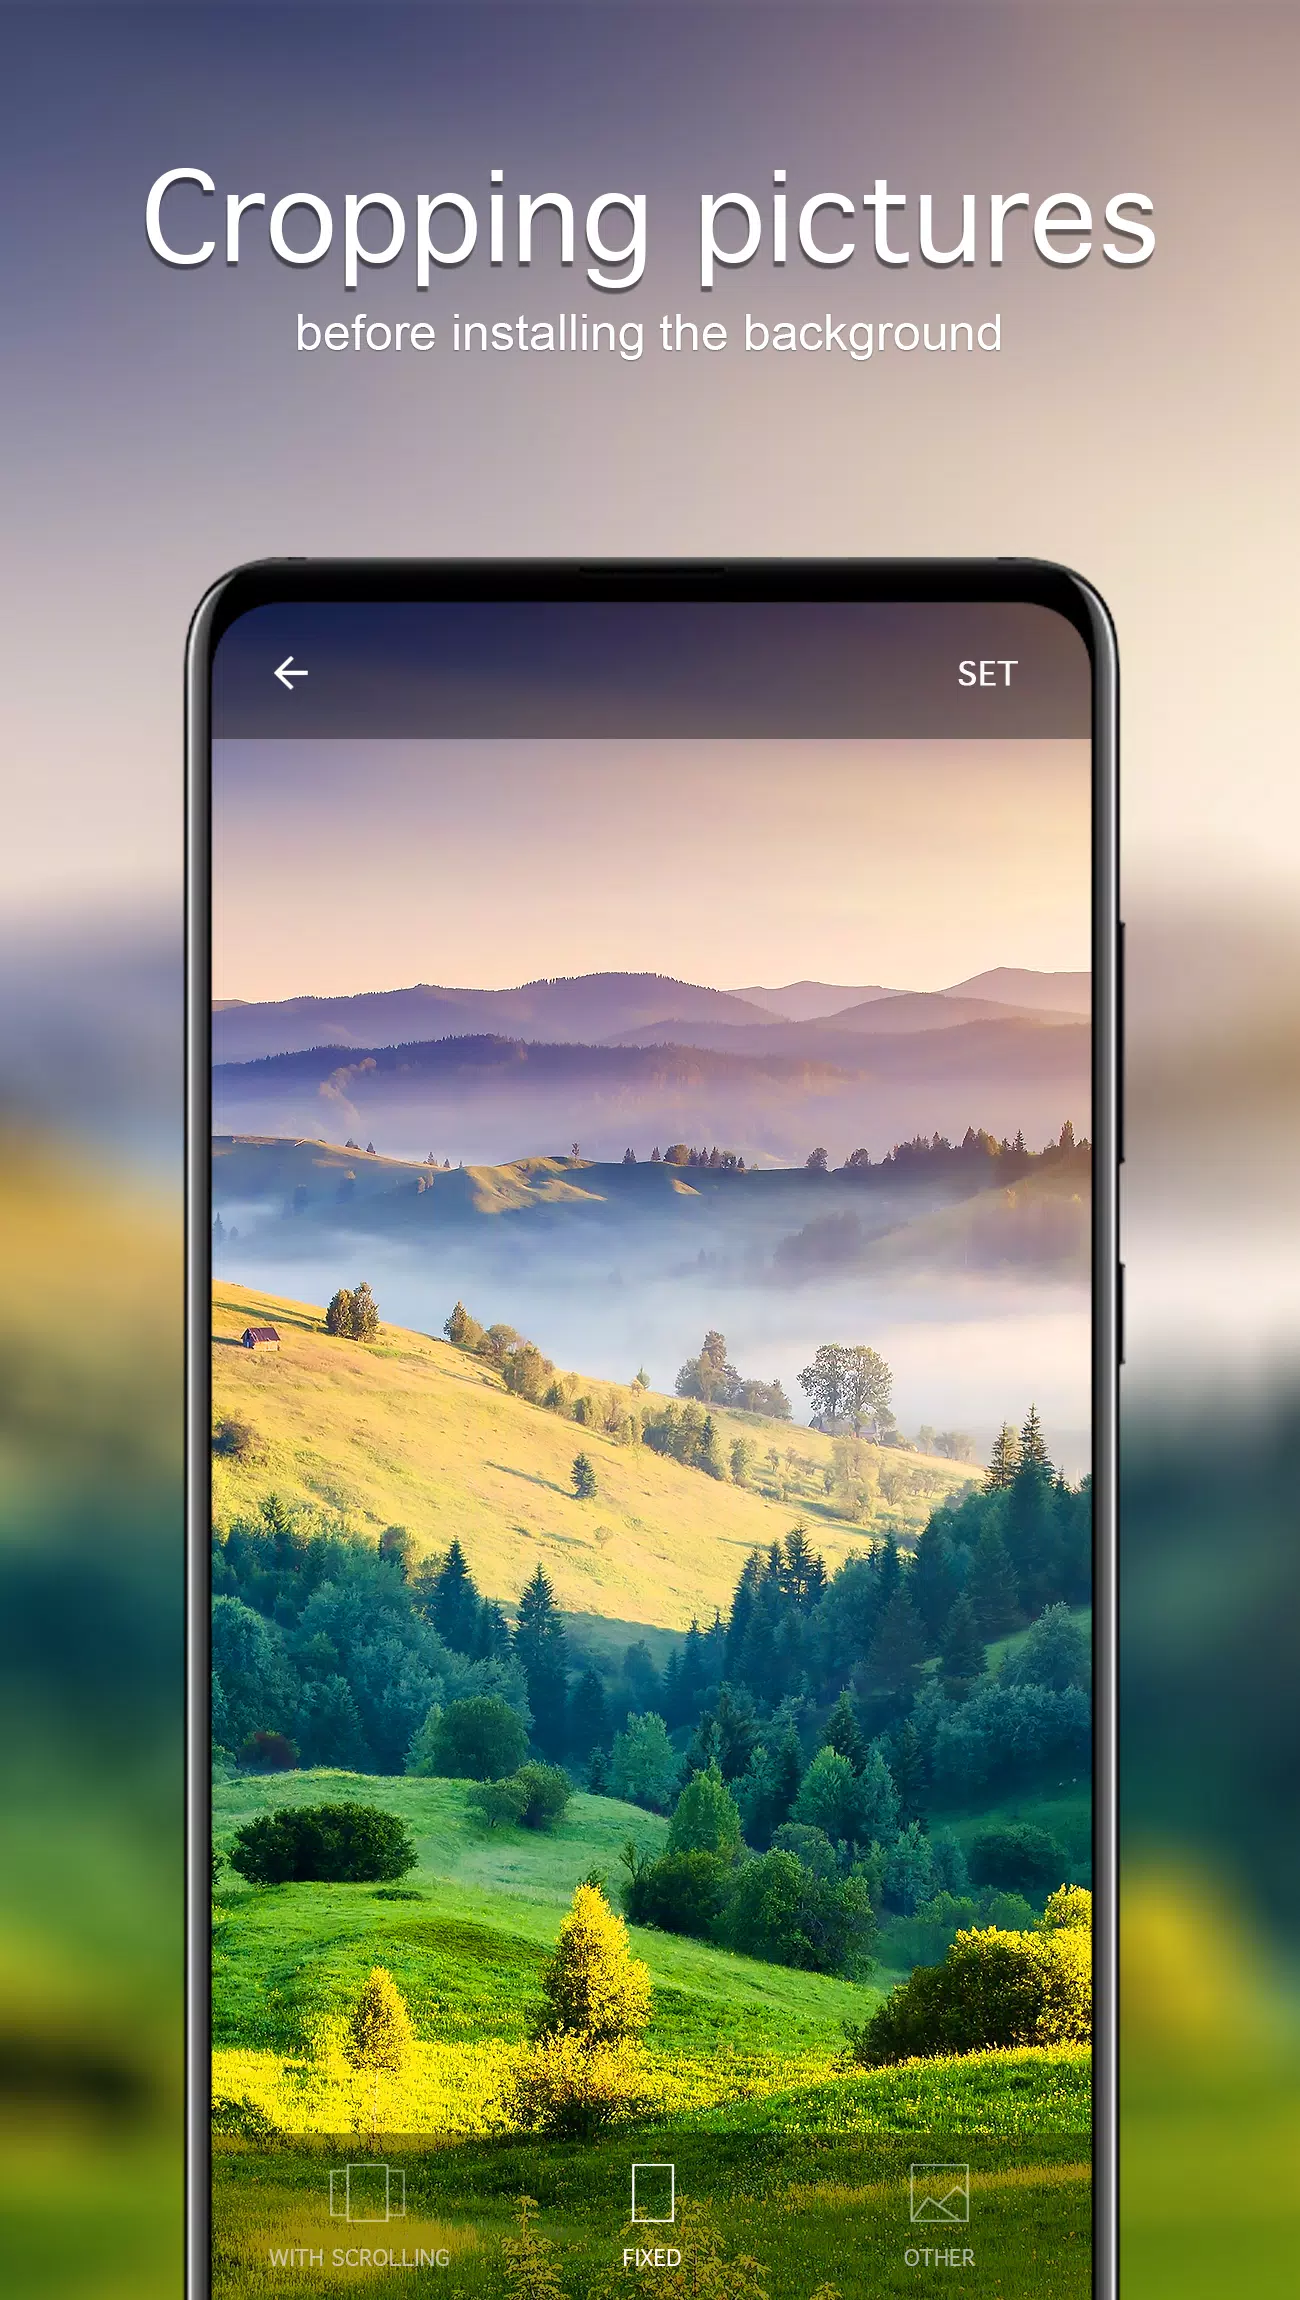 Landscape 4K-video live wallpaper for Android. Landscape 4K-video free  download for tablet and phone.